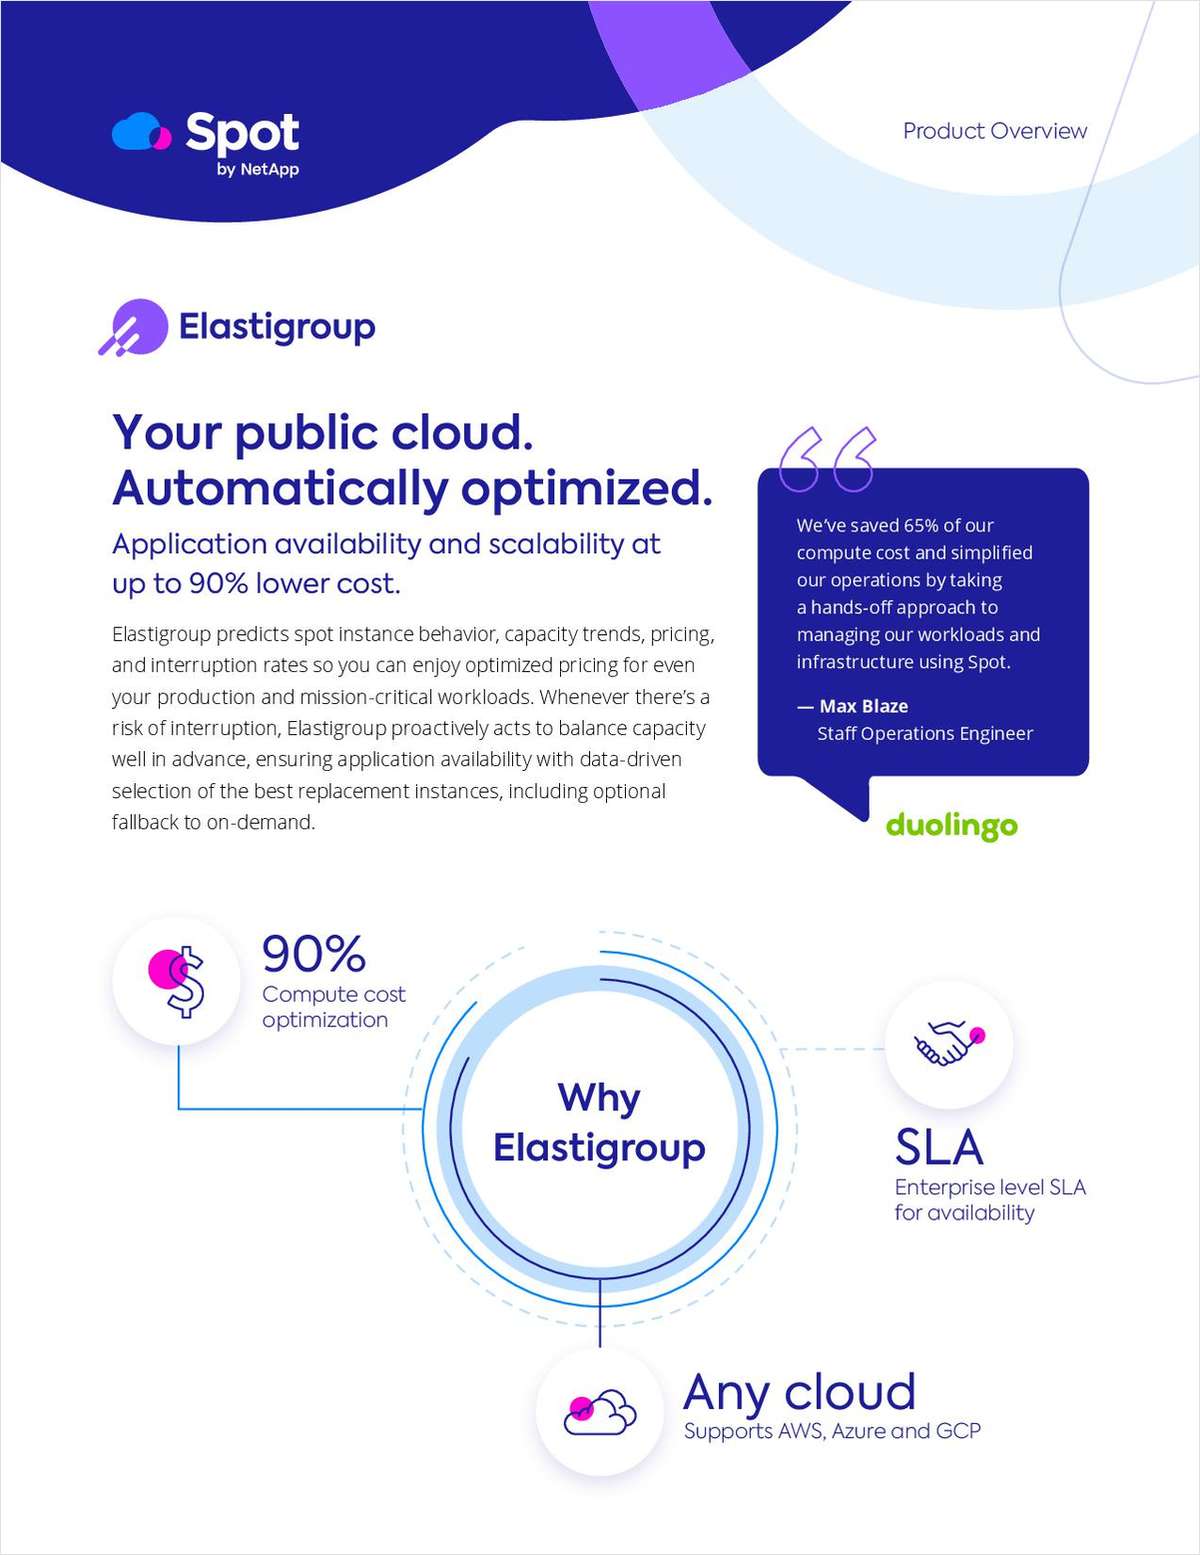 Your public cloud. Automatically optimized.